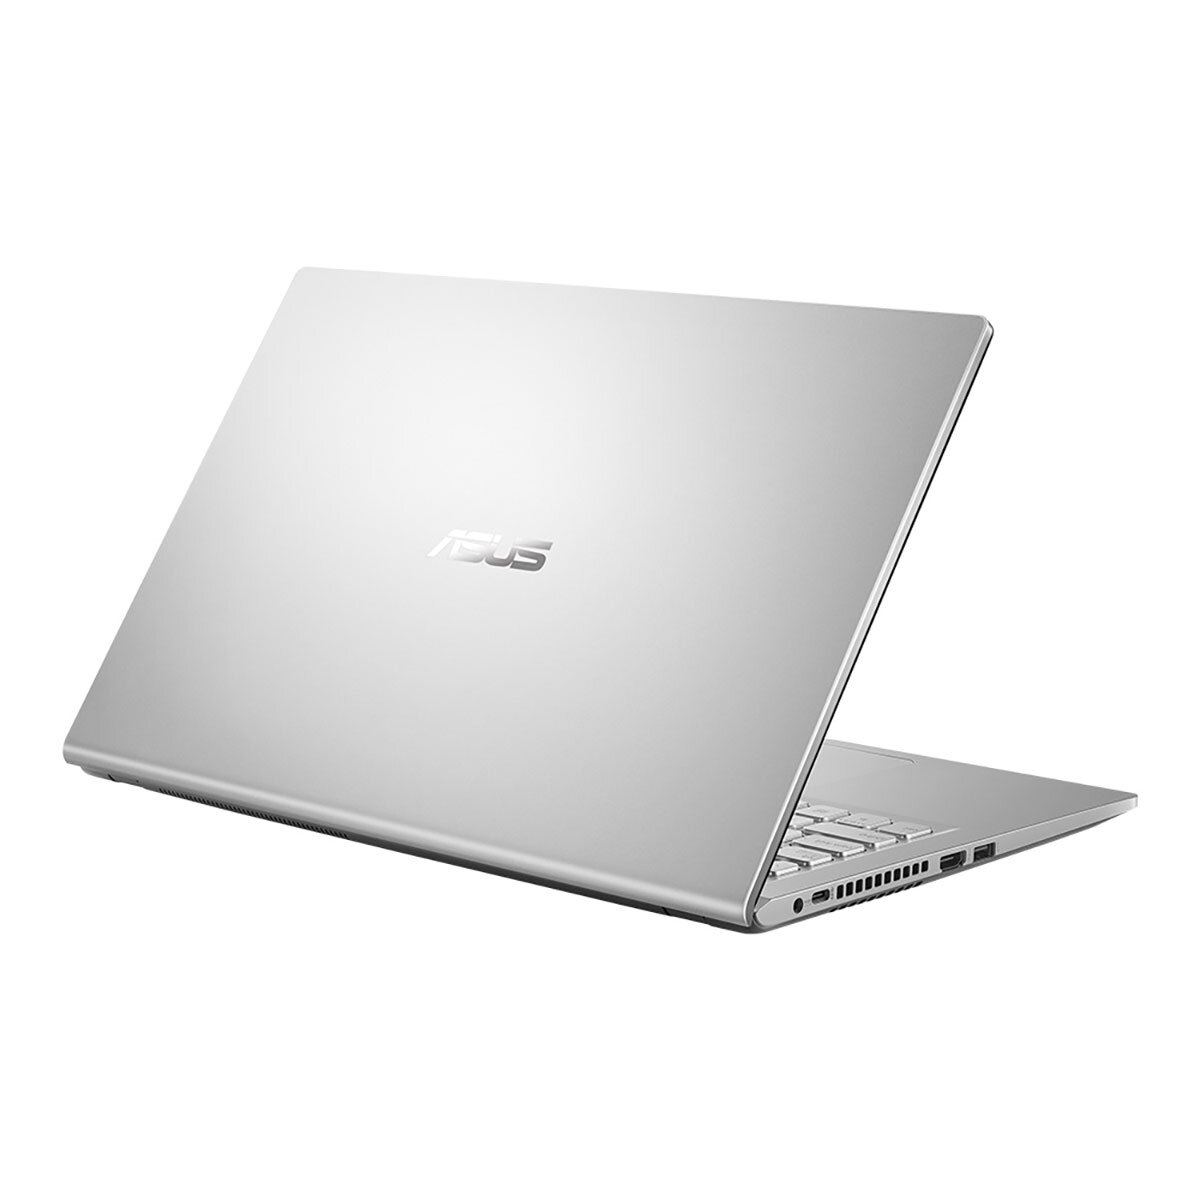 Buy ASUS VivoBook, Intel Core i3, 4GB RAM, 256GB SSD, 15.6 Inch Laptop, X515EA-BQ068T at Costco.co.uk